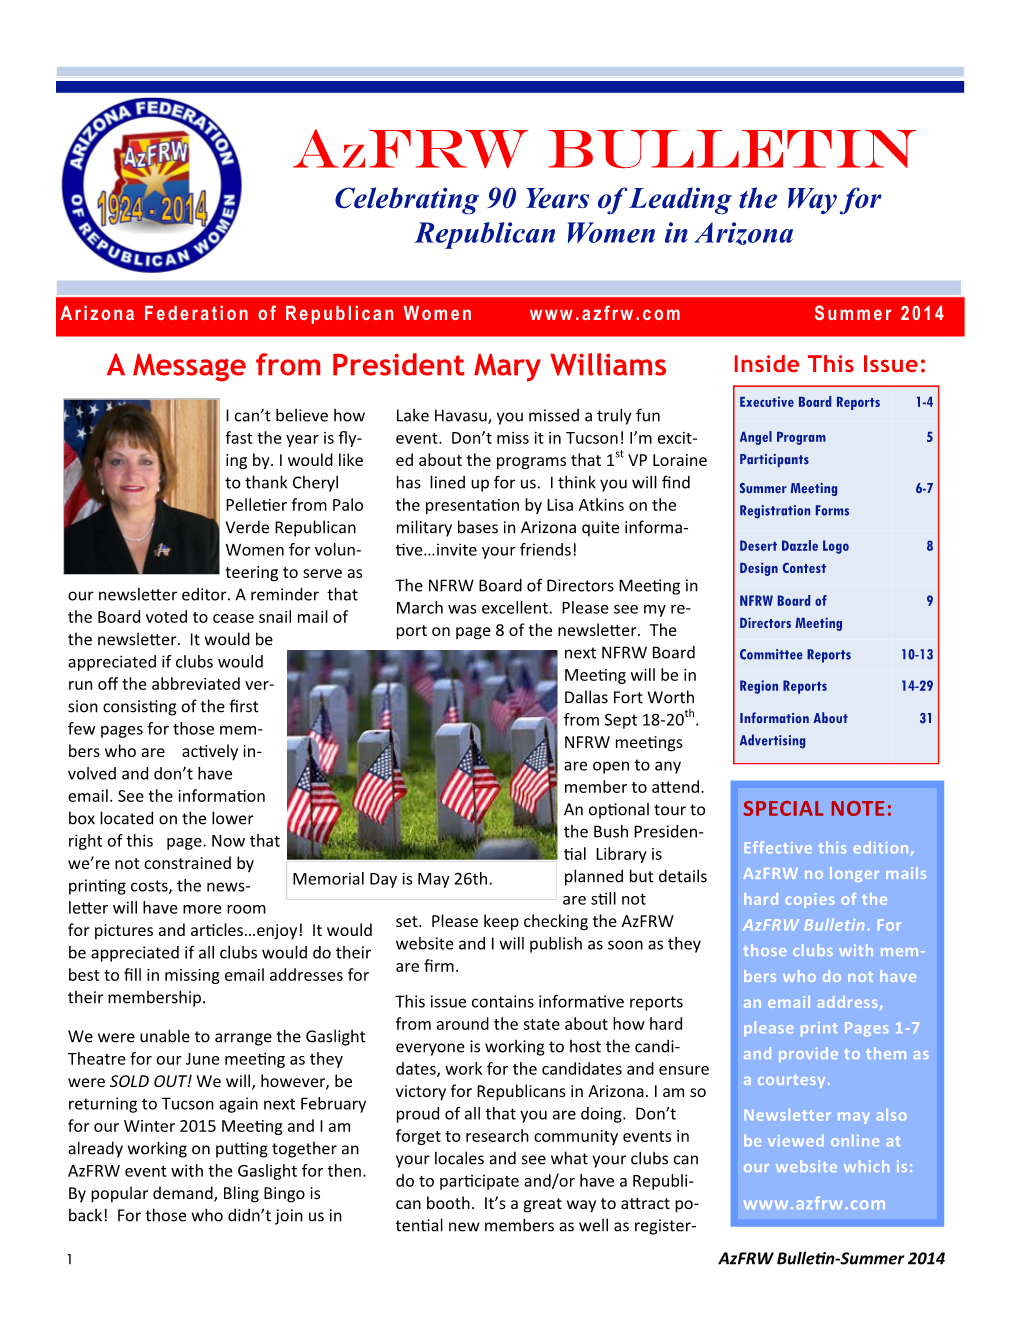 AZFRW Bulletin Celebrating 90 Years of Leading the Way for Republican Women in Arizona